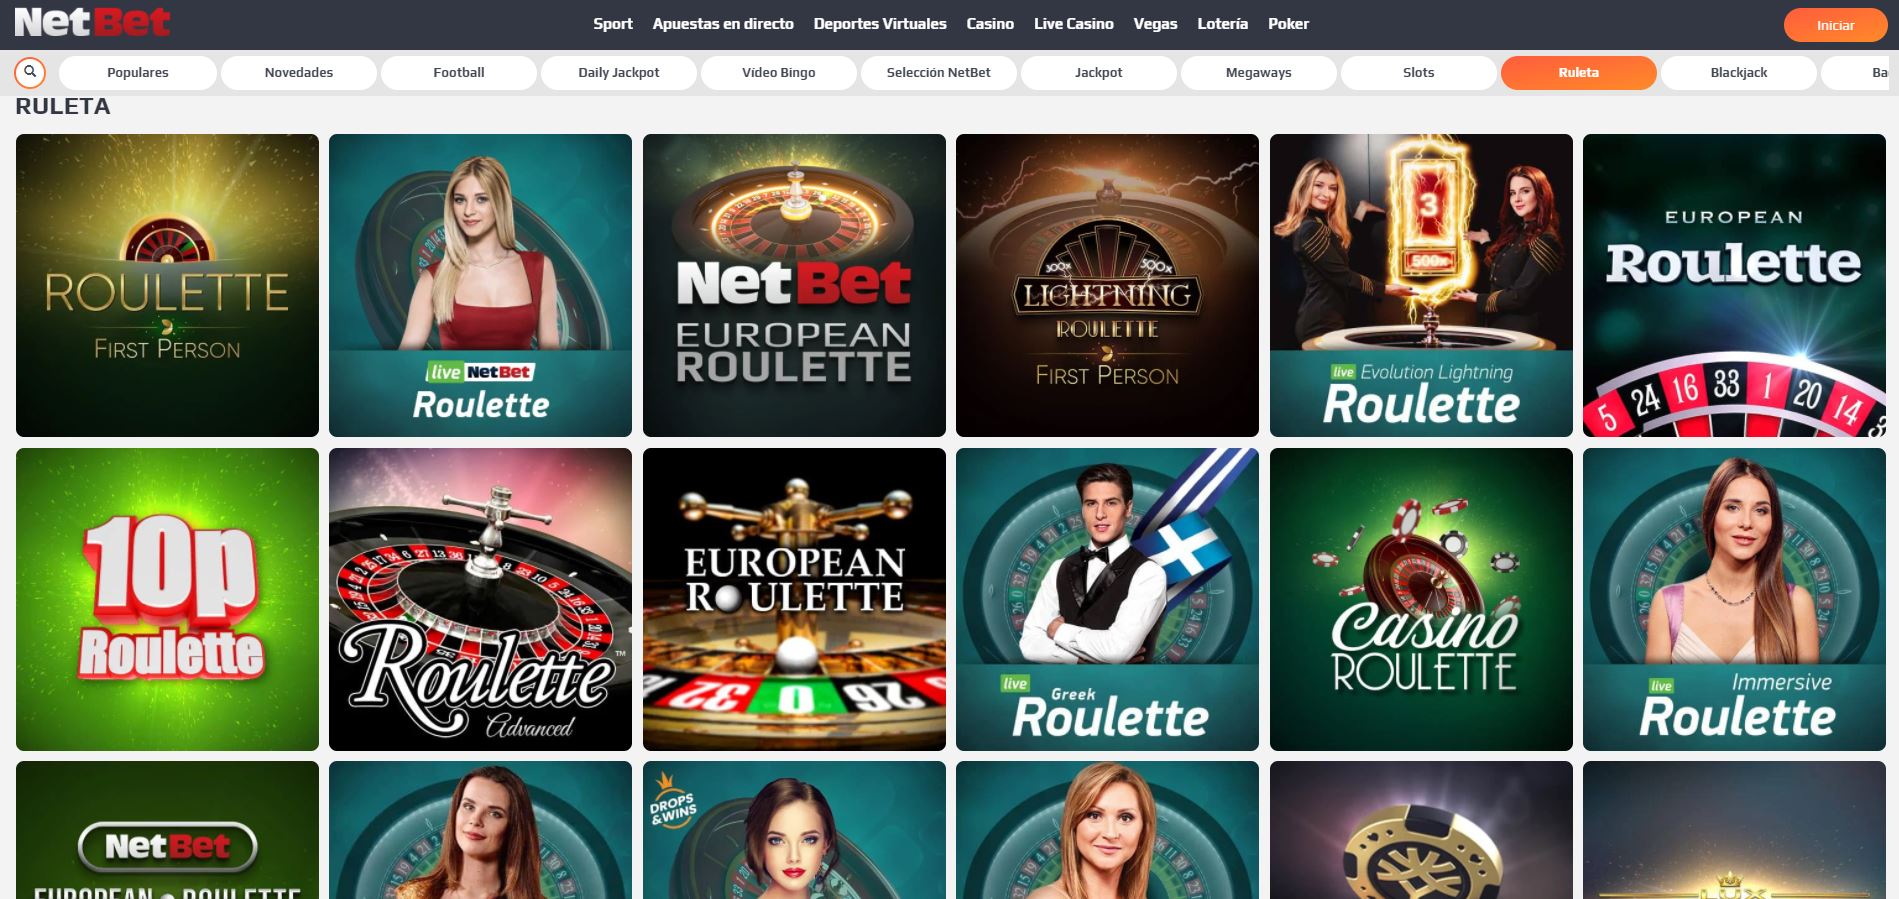 Ruleta en NetBet casino